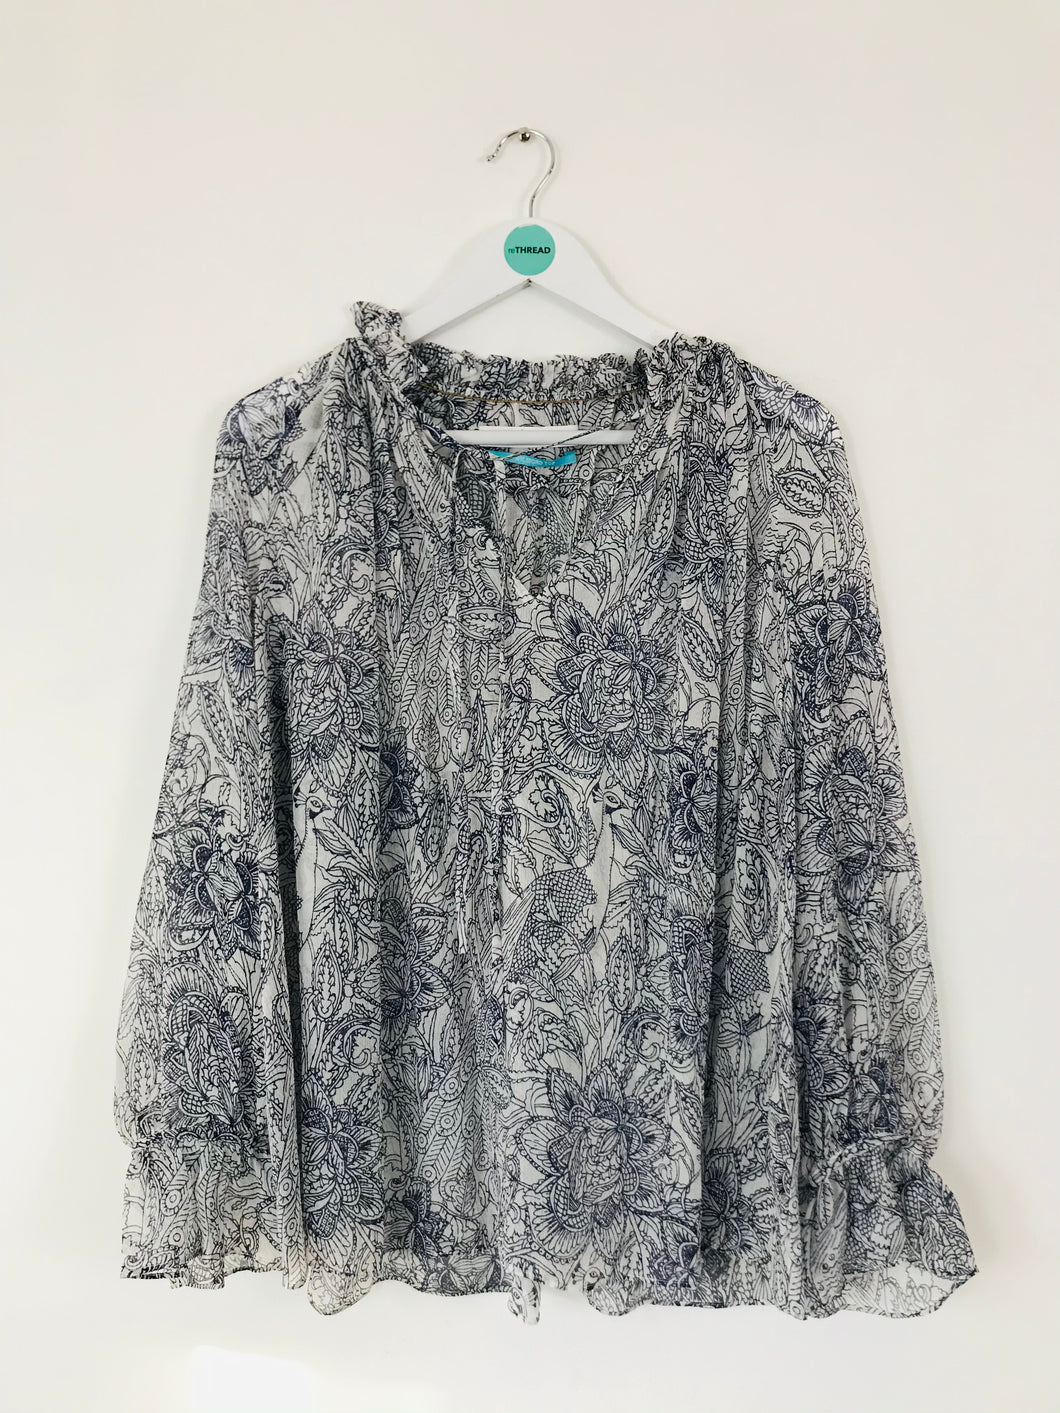 Boden Women’s Floral Silk Oversized Blouse | S UK 8-10 | Blue